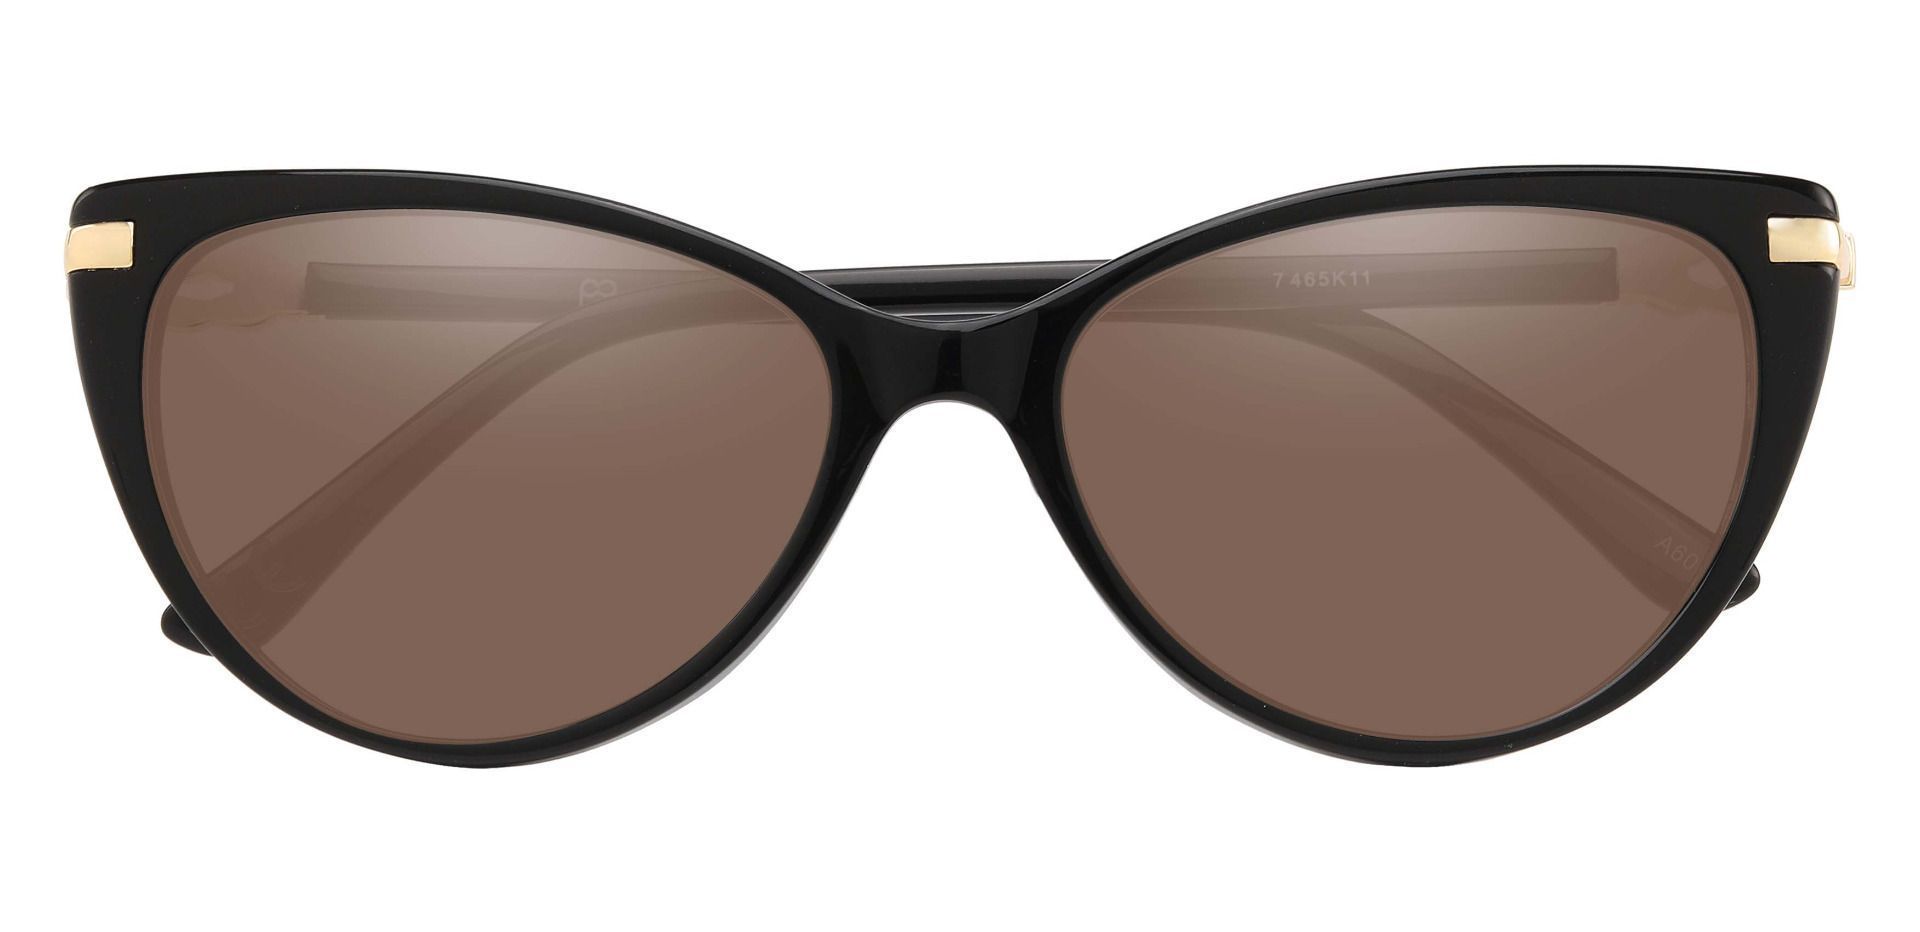 Starla Cat Eye Non-Rx Sunglasses - Black Frame With Brown Lenses